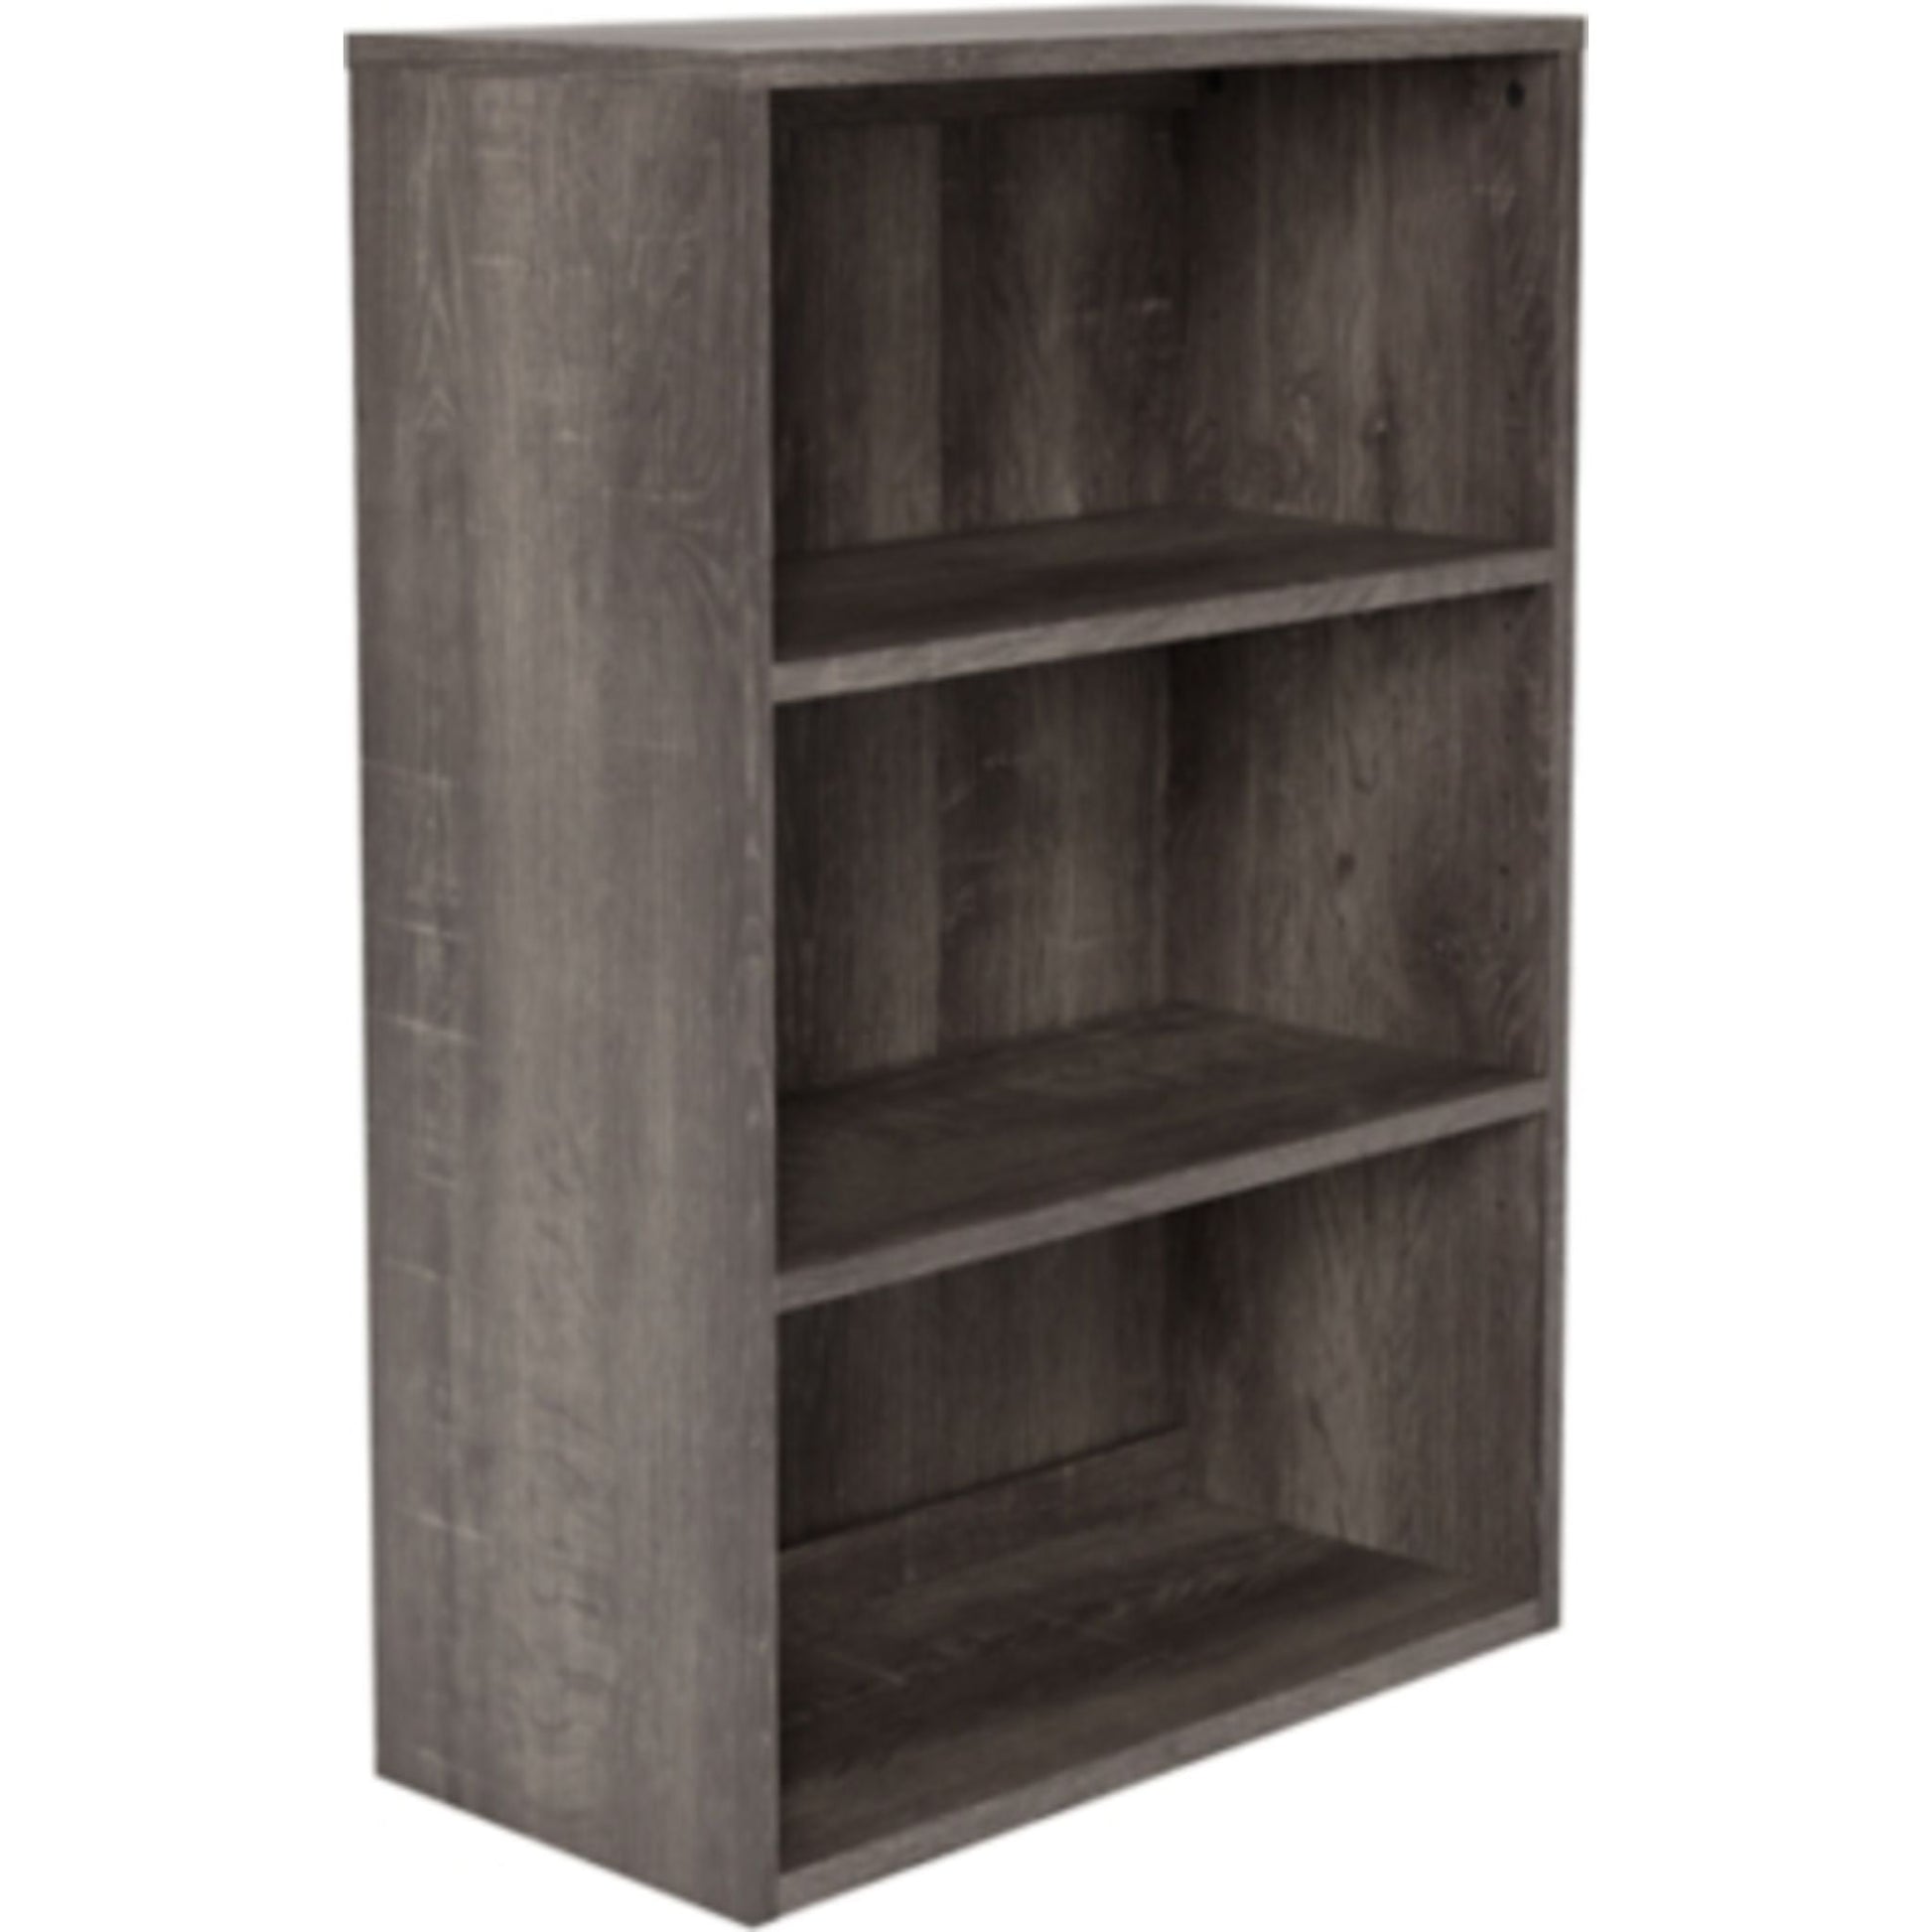 Arlenbry Medium Bookcase - Gray